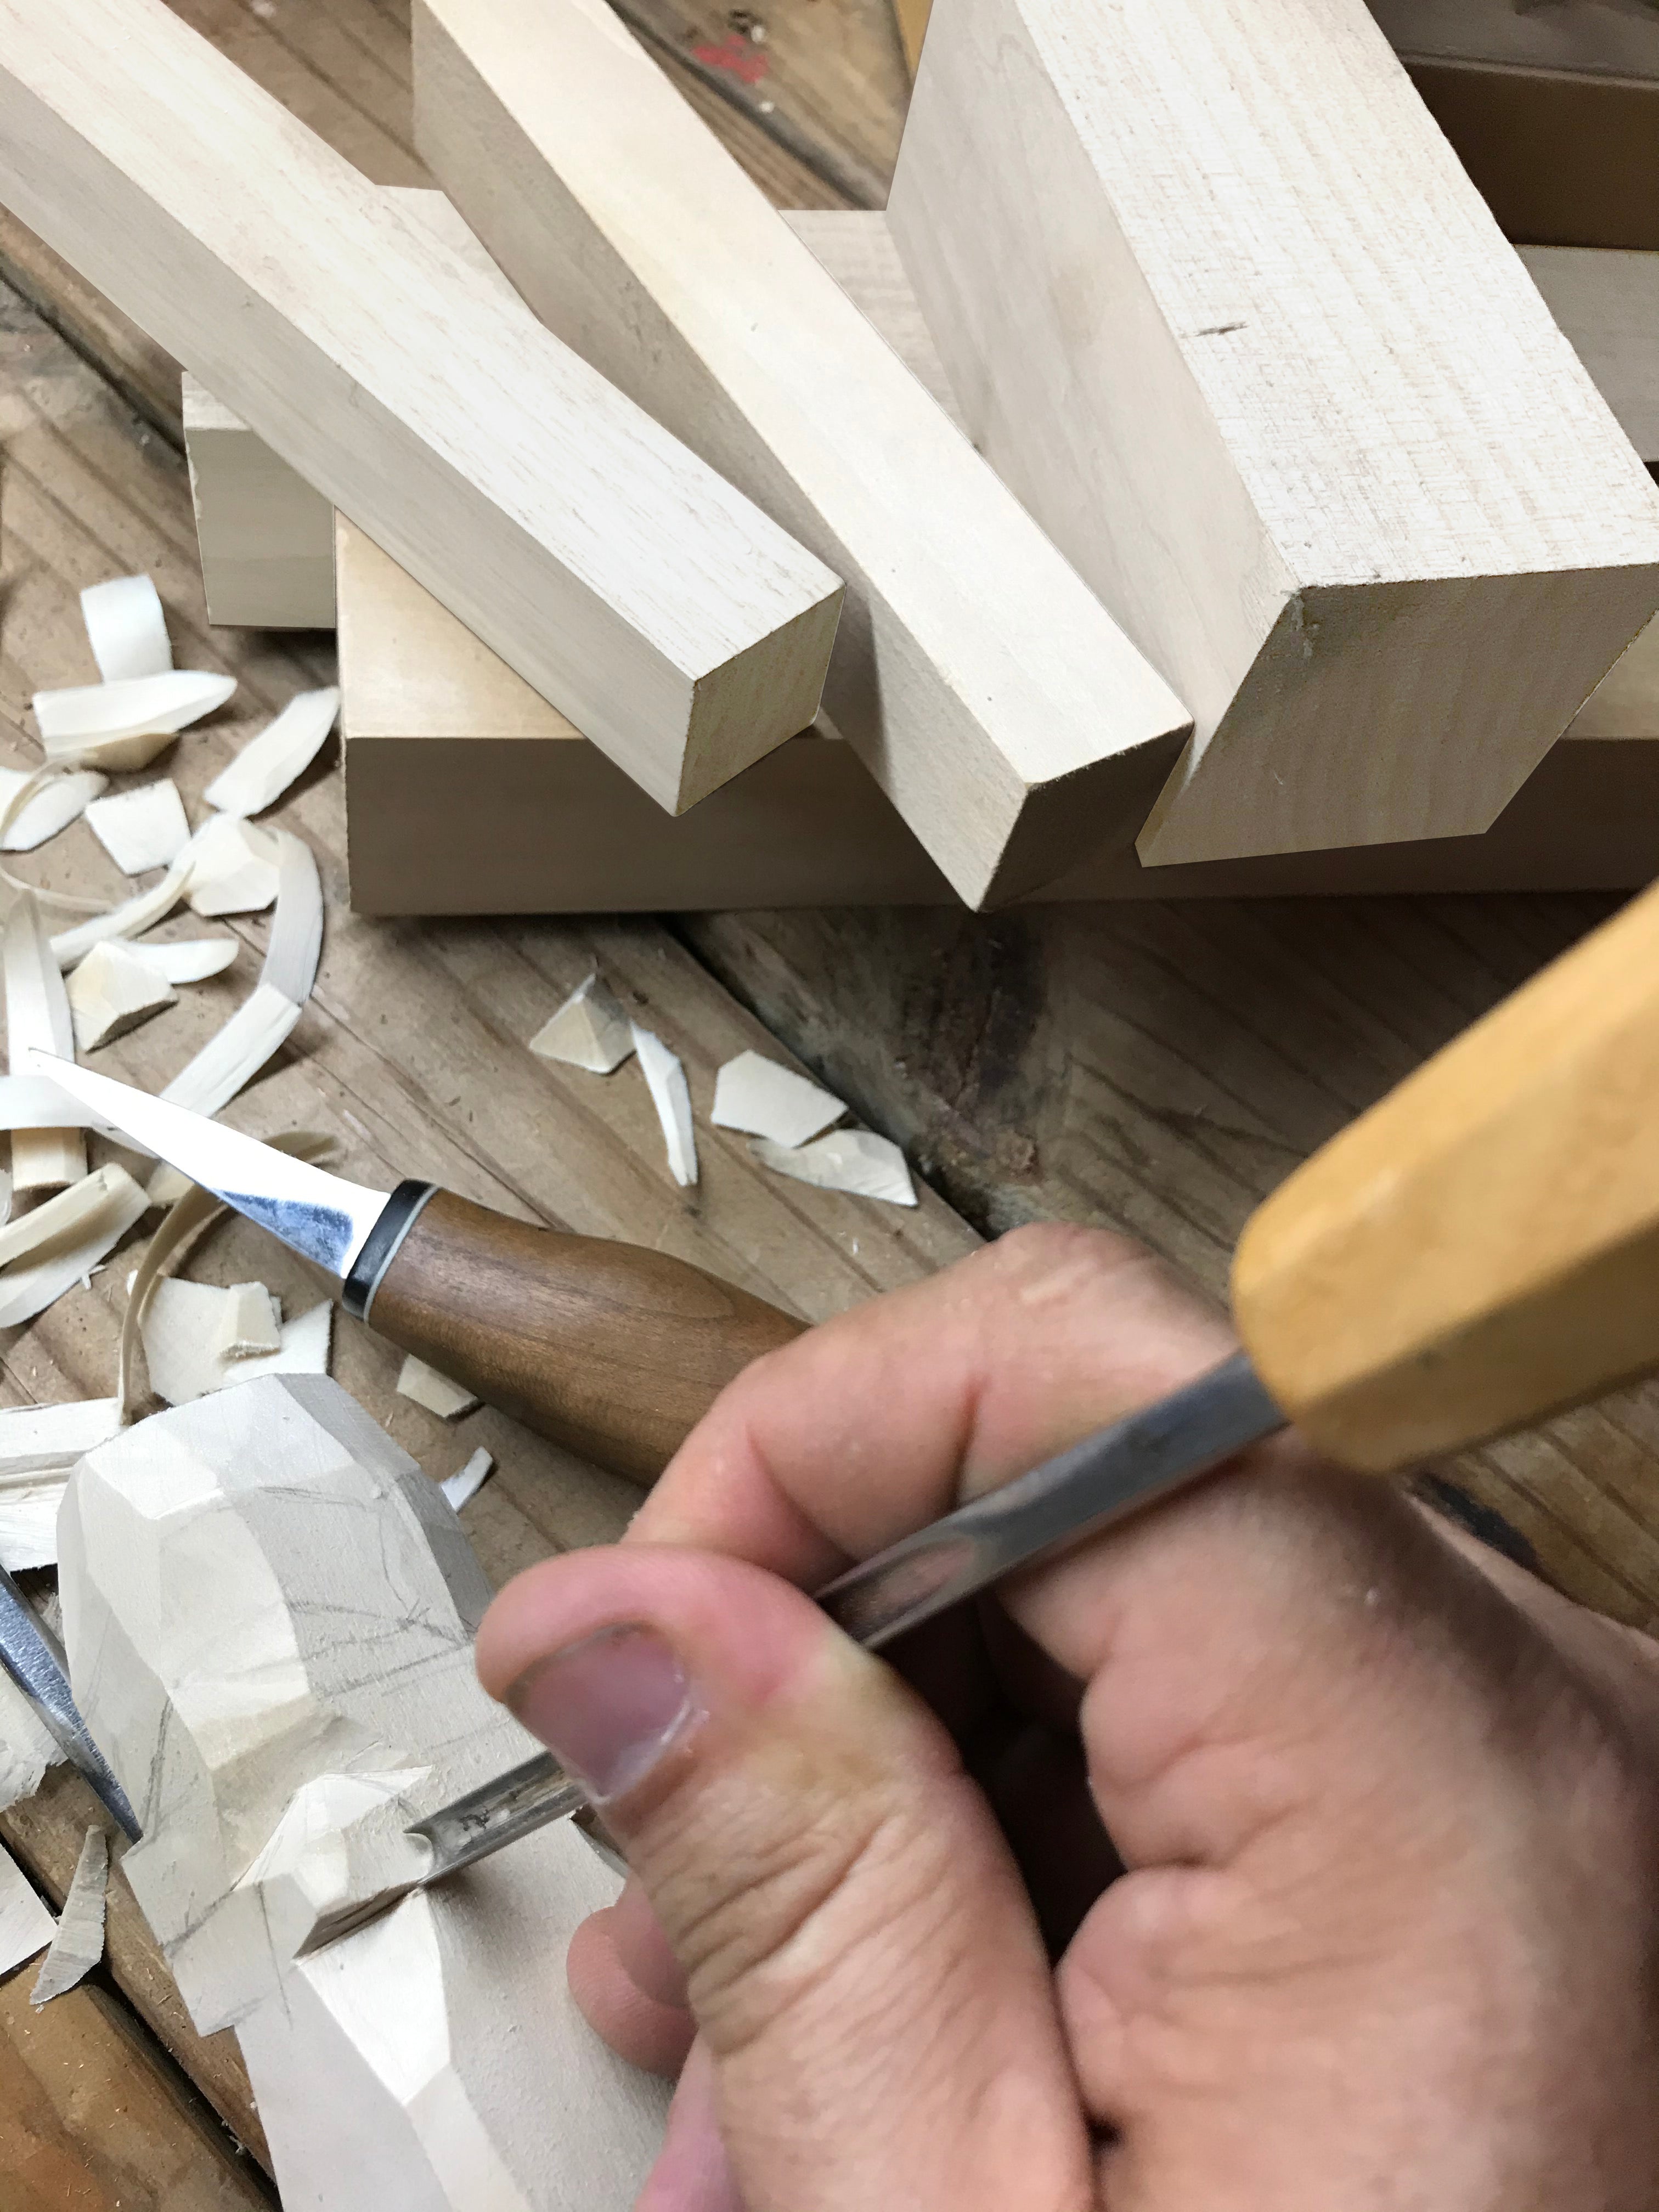 Exotic Wood Zone Set of 4, Basswood Carving Blocks/turning Blocks Kit 2 X 2  X 6 Carved Wood Whittling Wood Carving Blocks DIY 